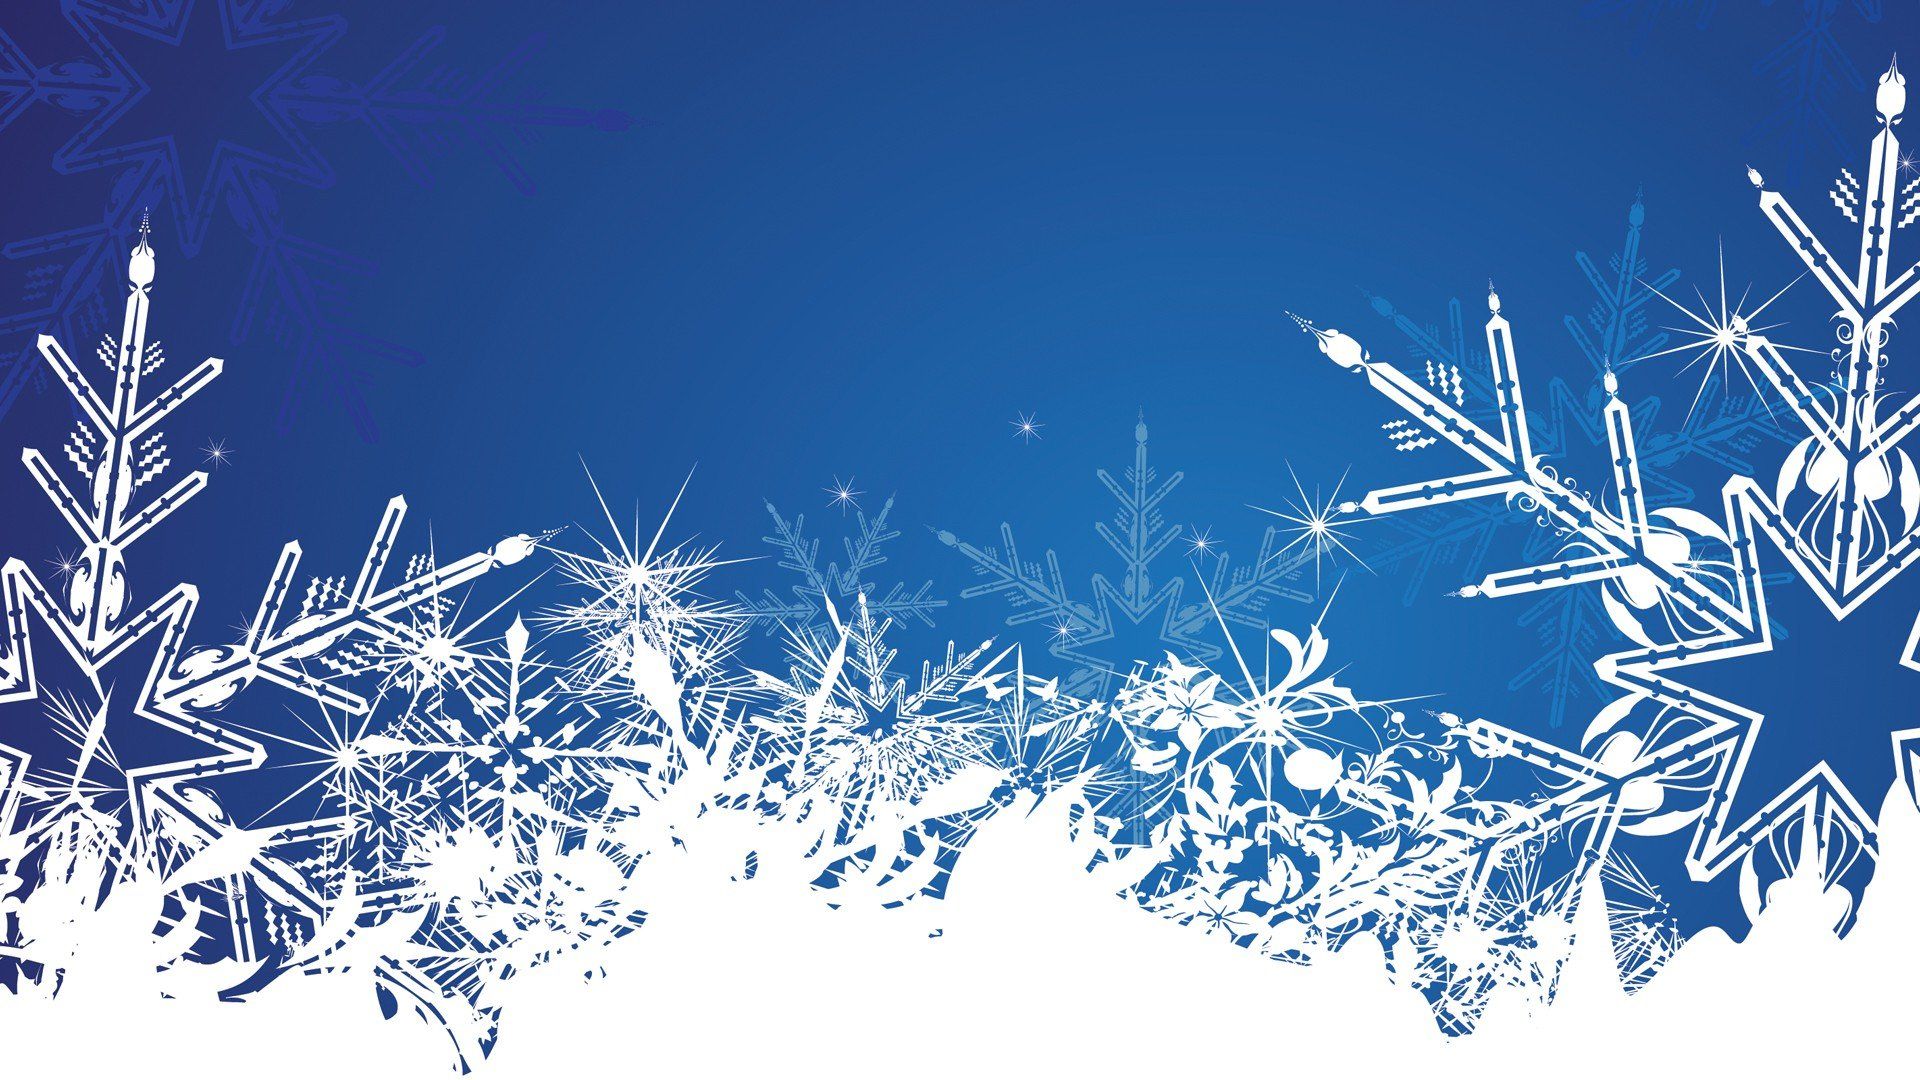 Winter vectors illustrations snowflakes blue background vector art wallpaperx1080